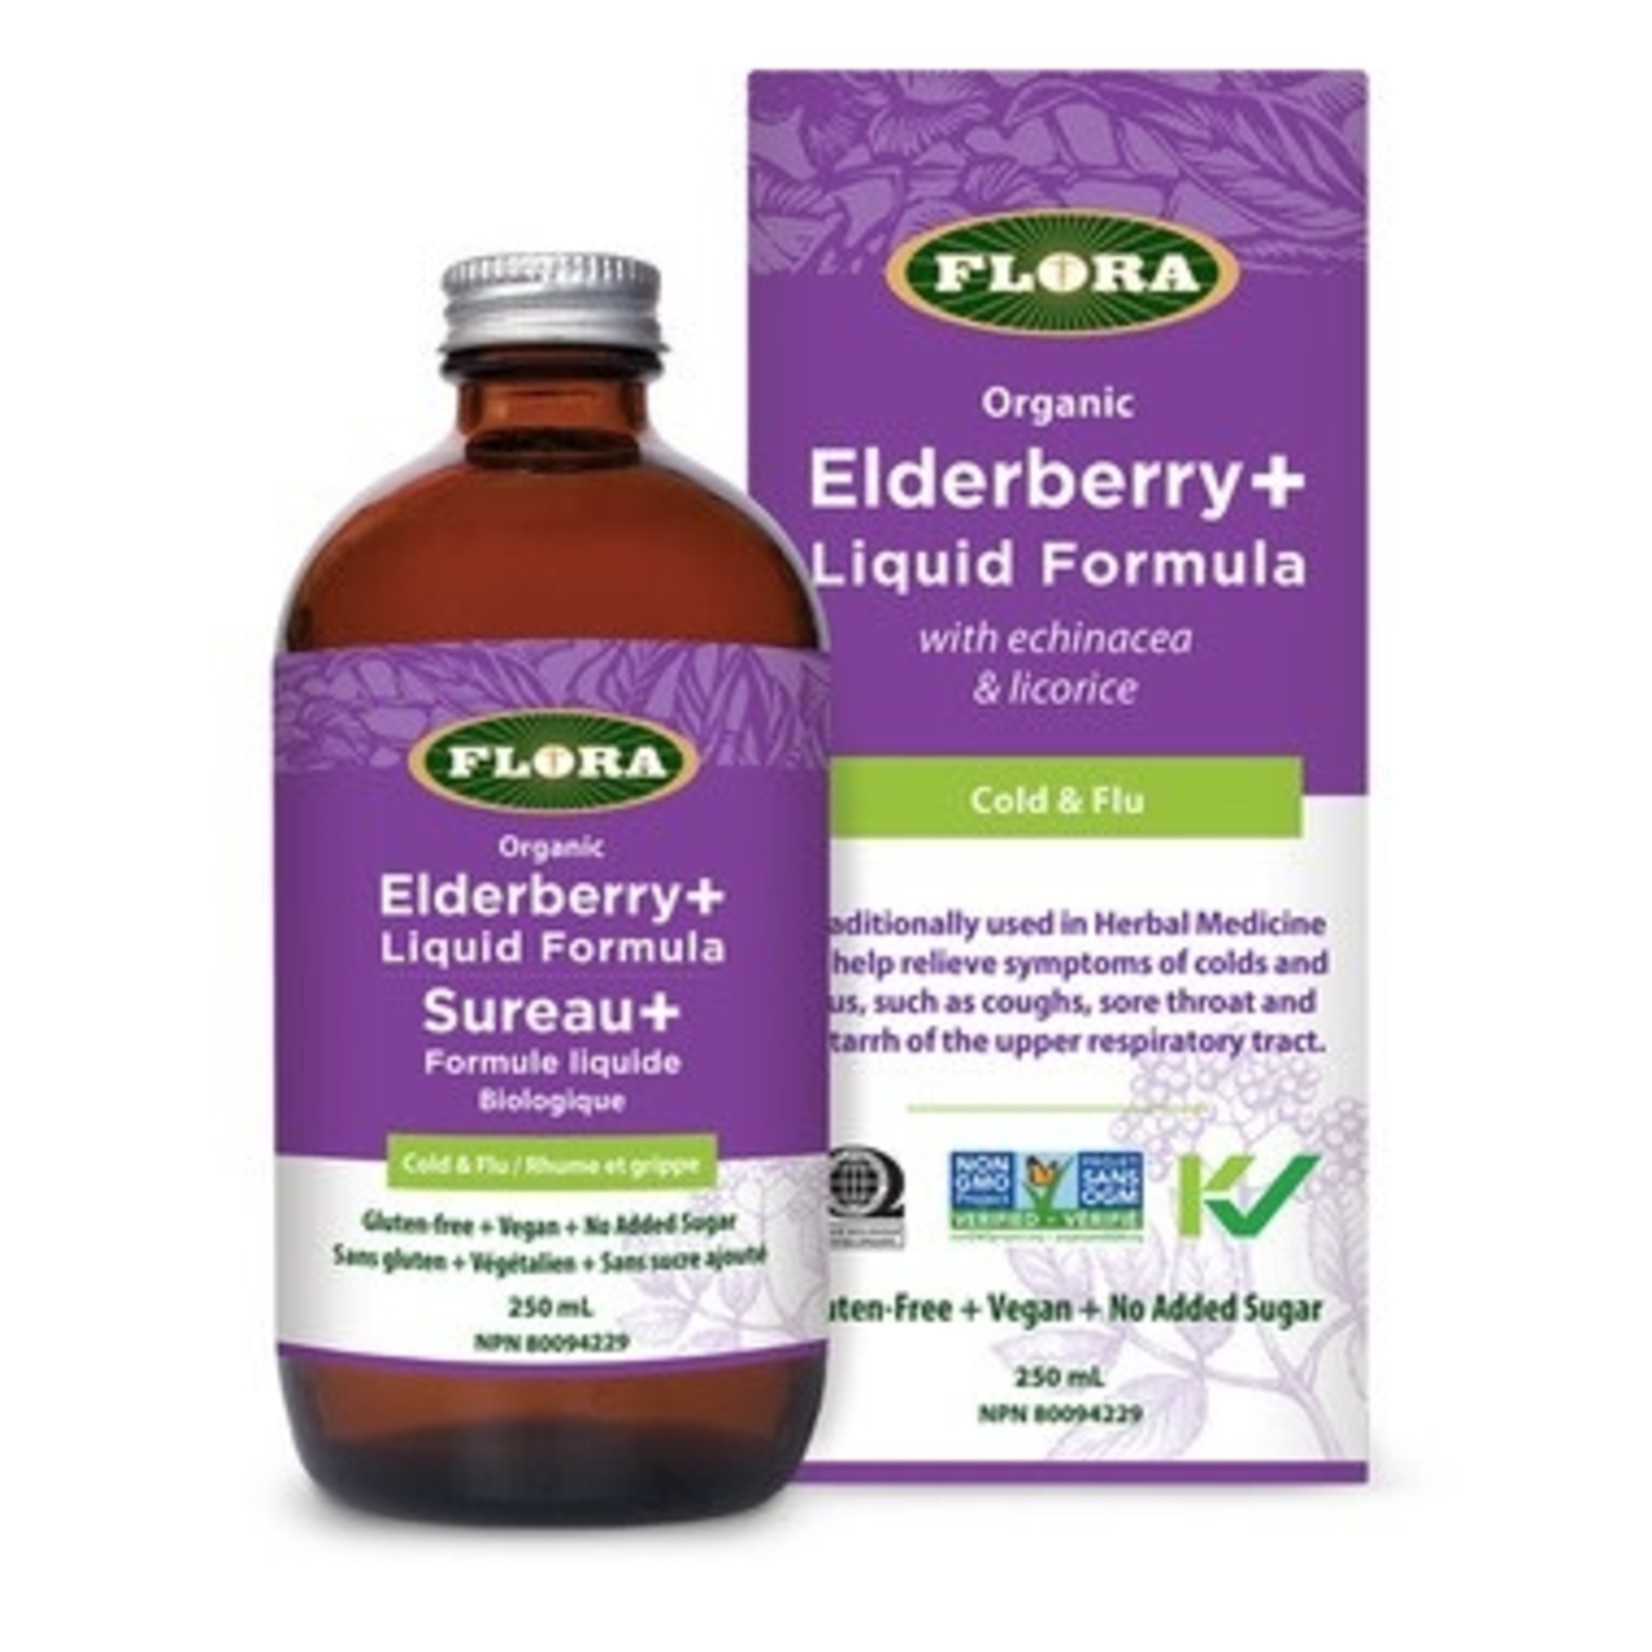 Flora Flora Elderberry+ Liquid 250ml